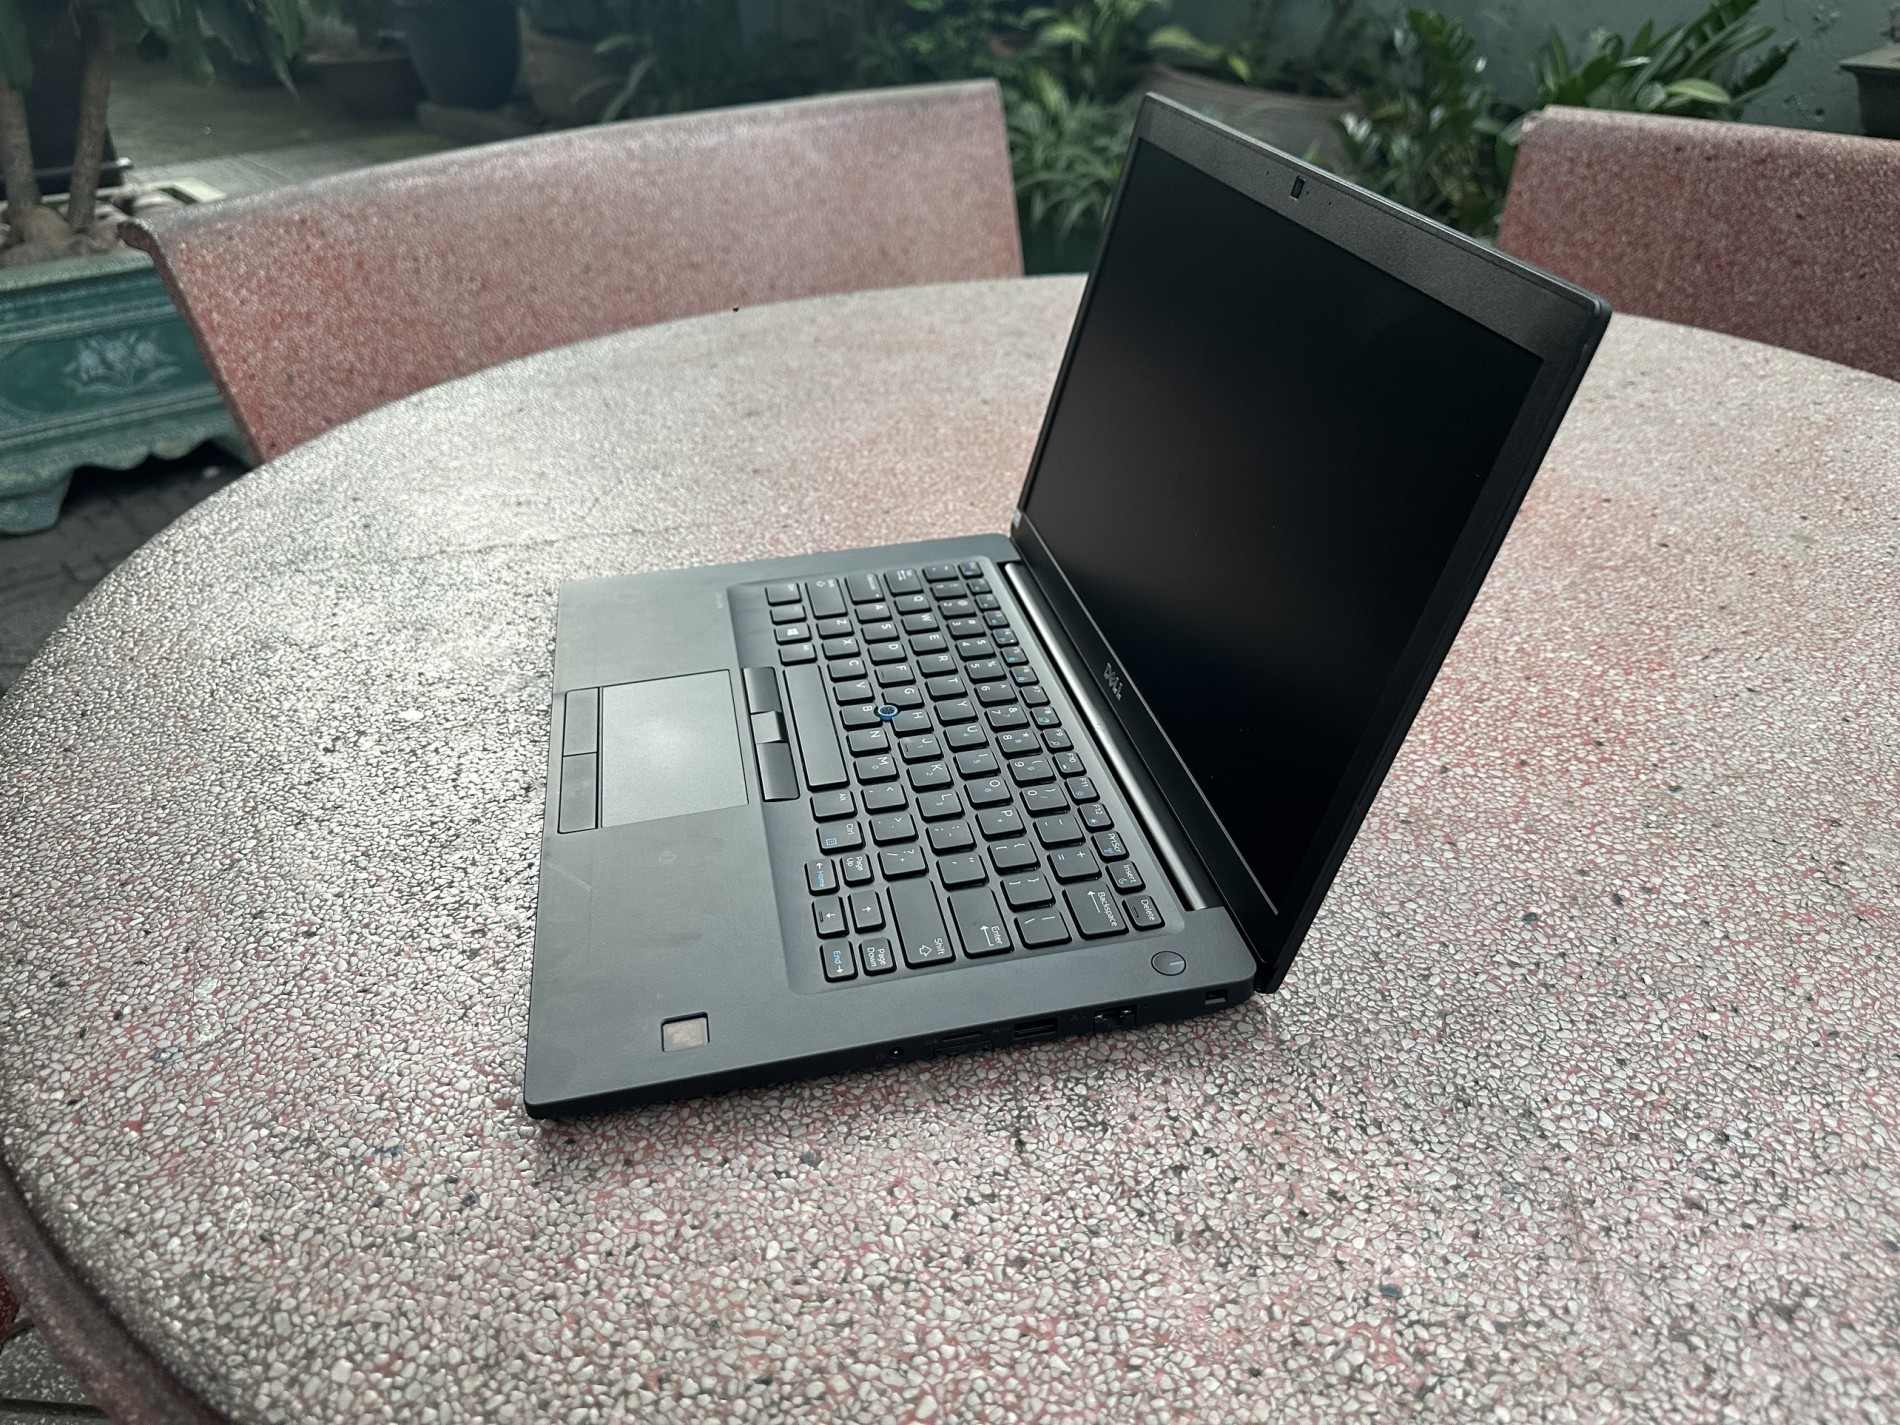 Laptop Dell 7490